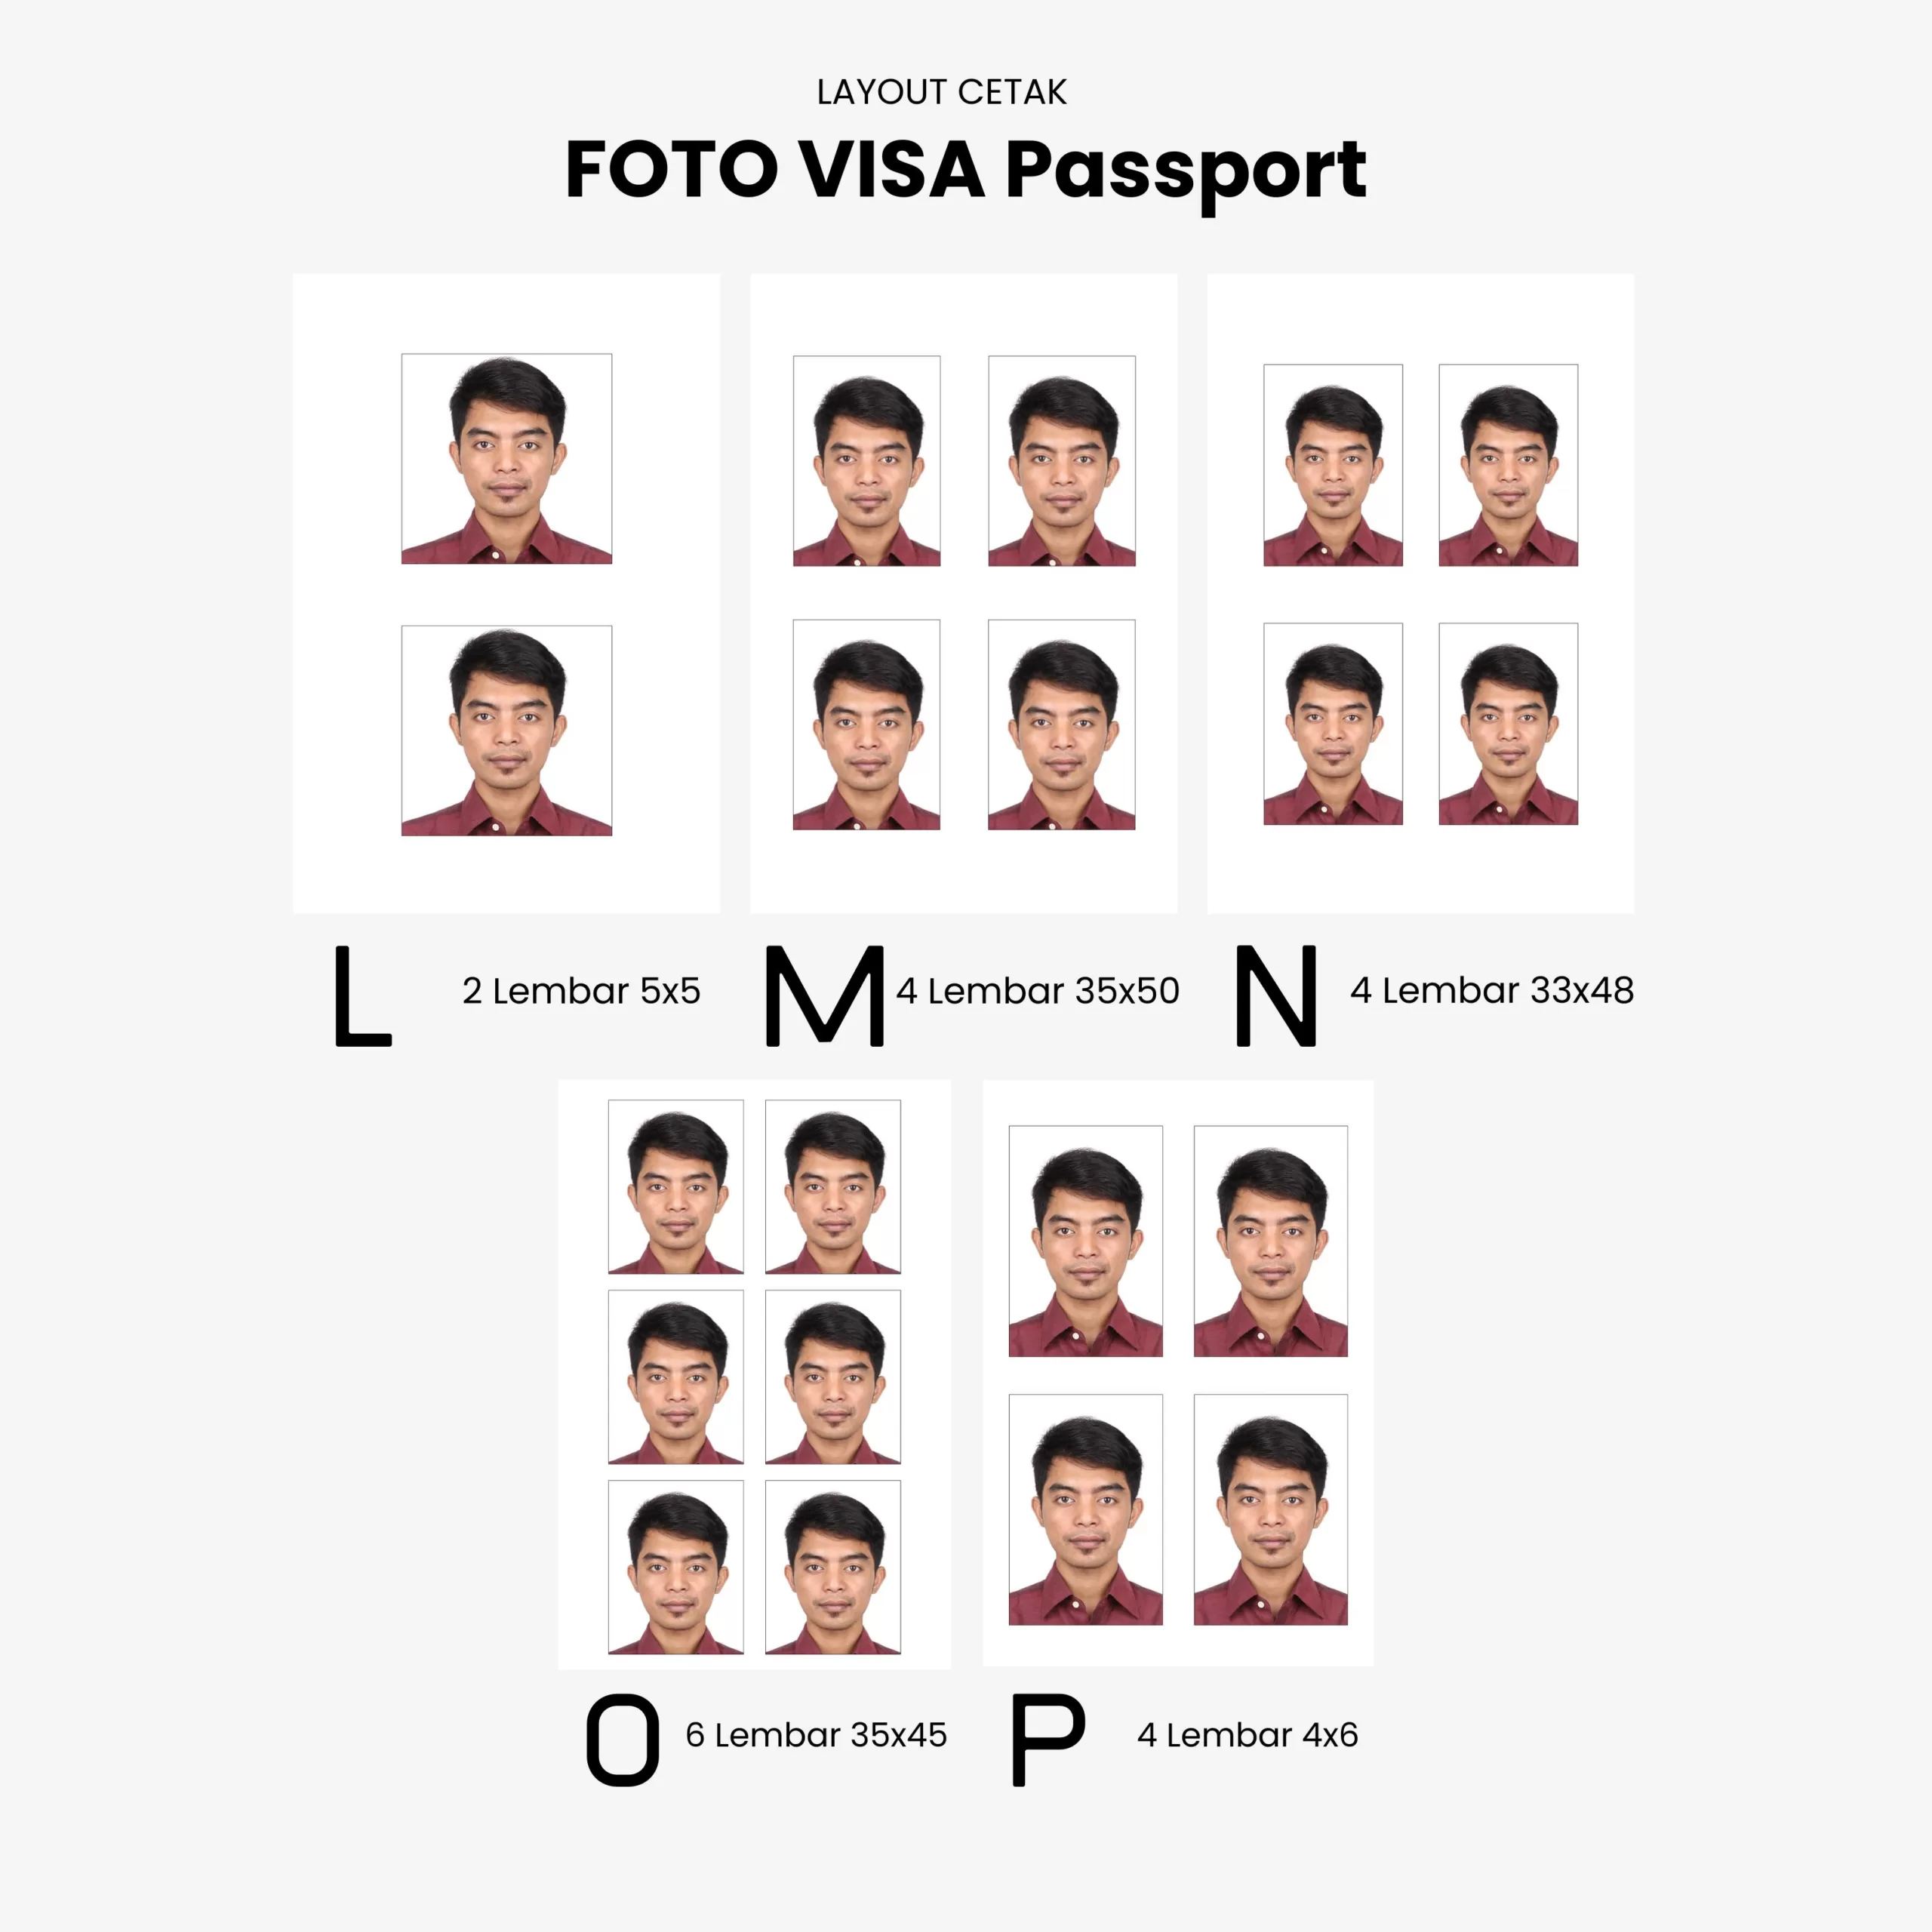 Layout Cetak Foto Visa Passport